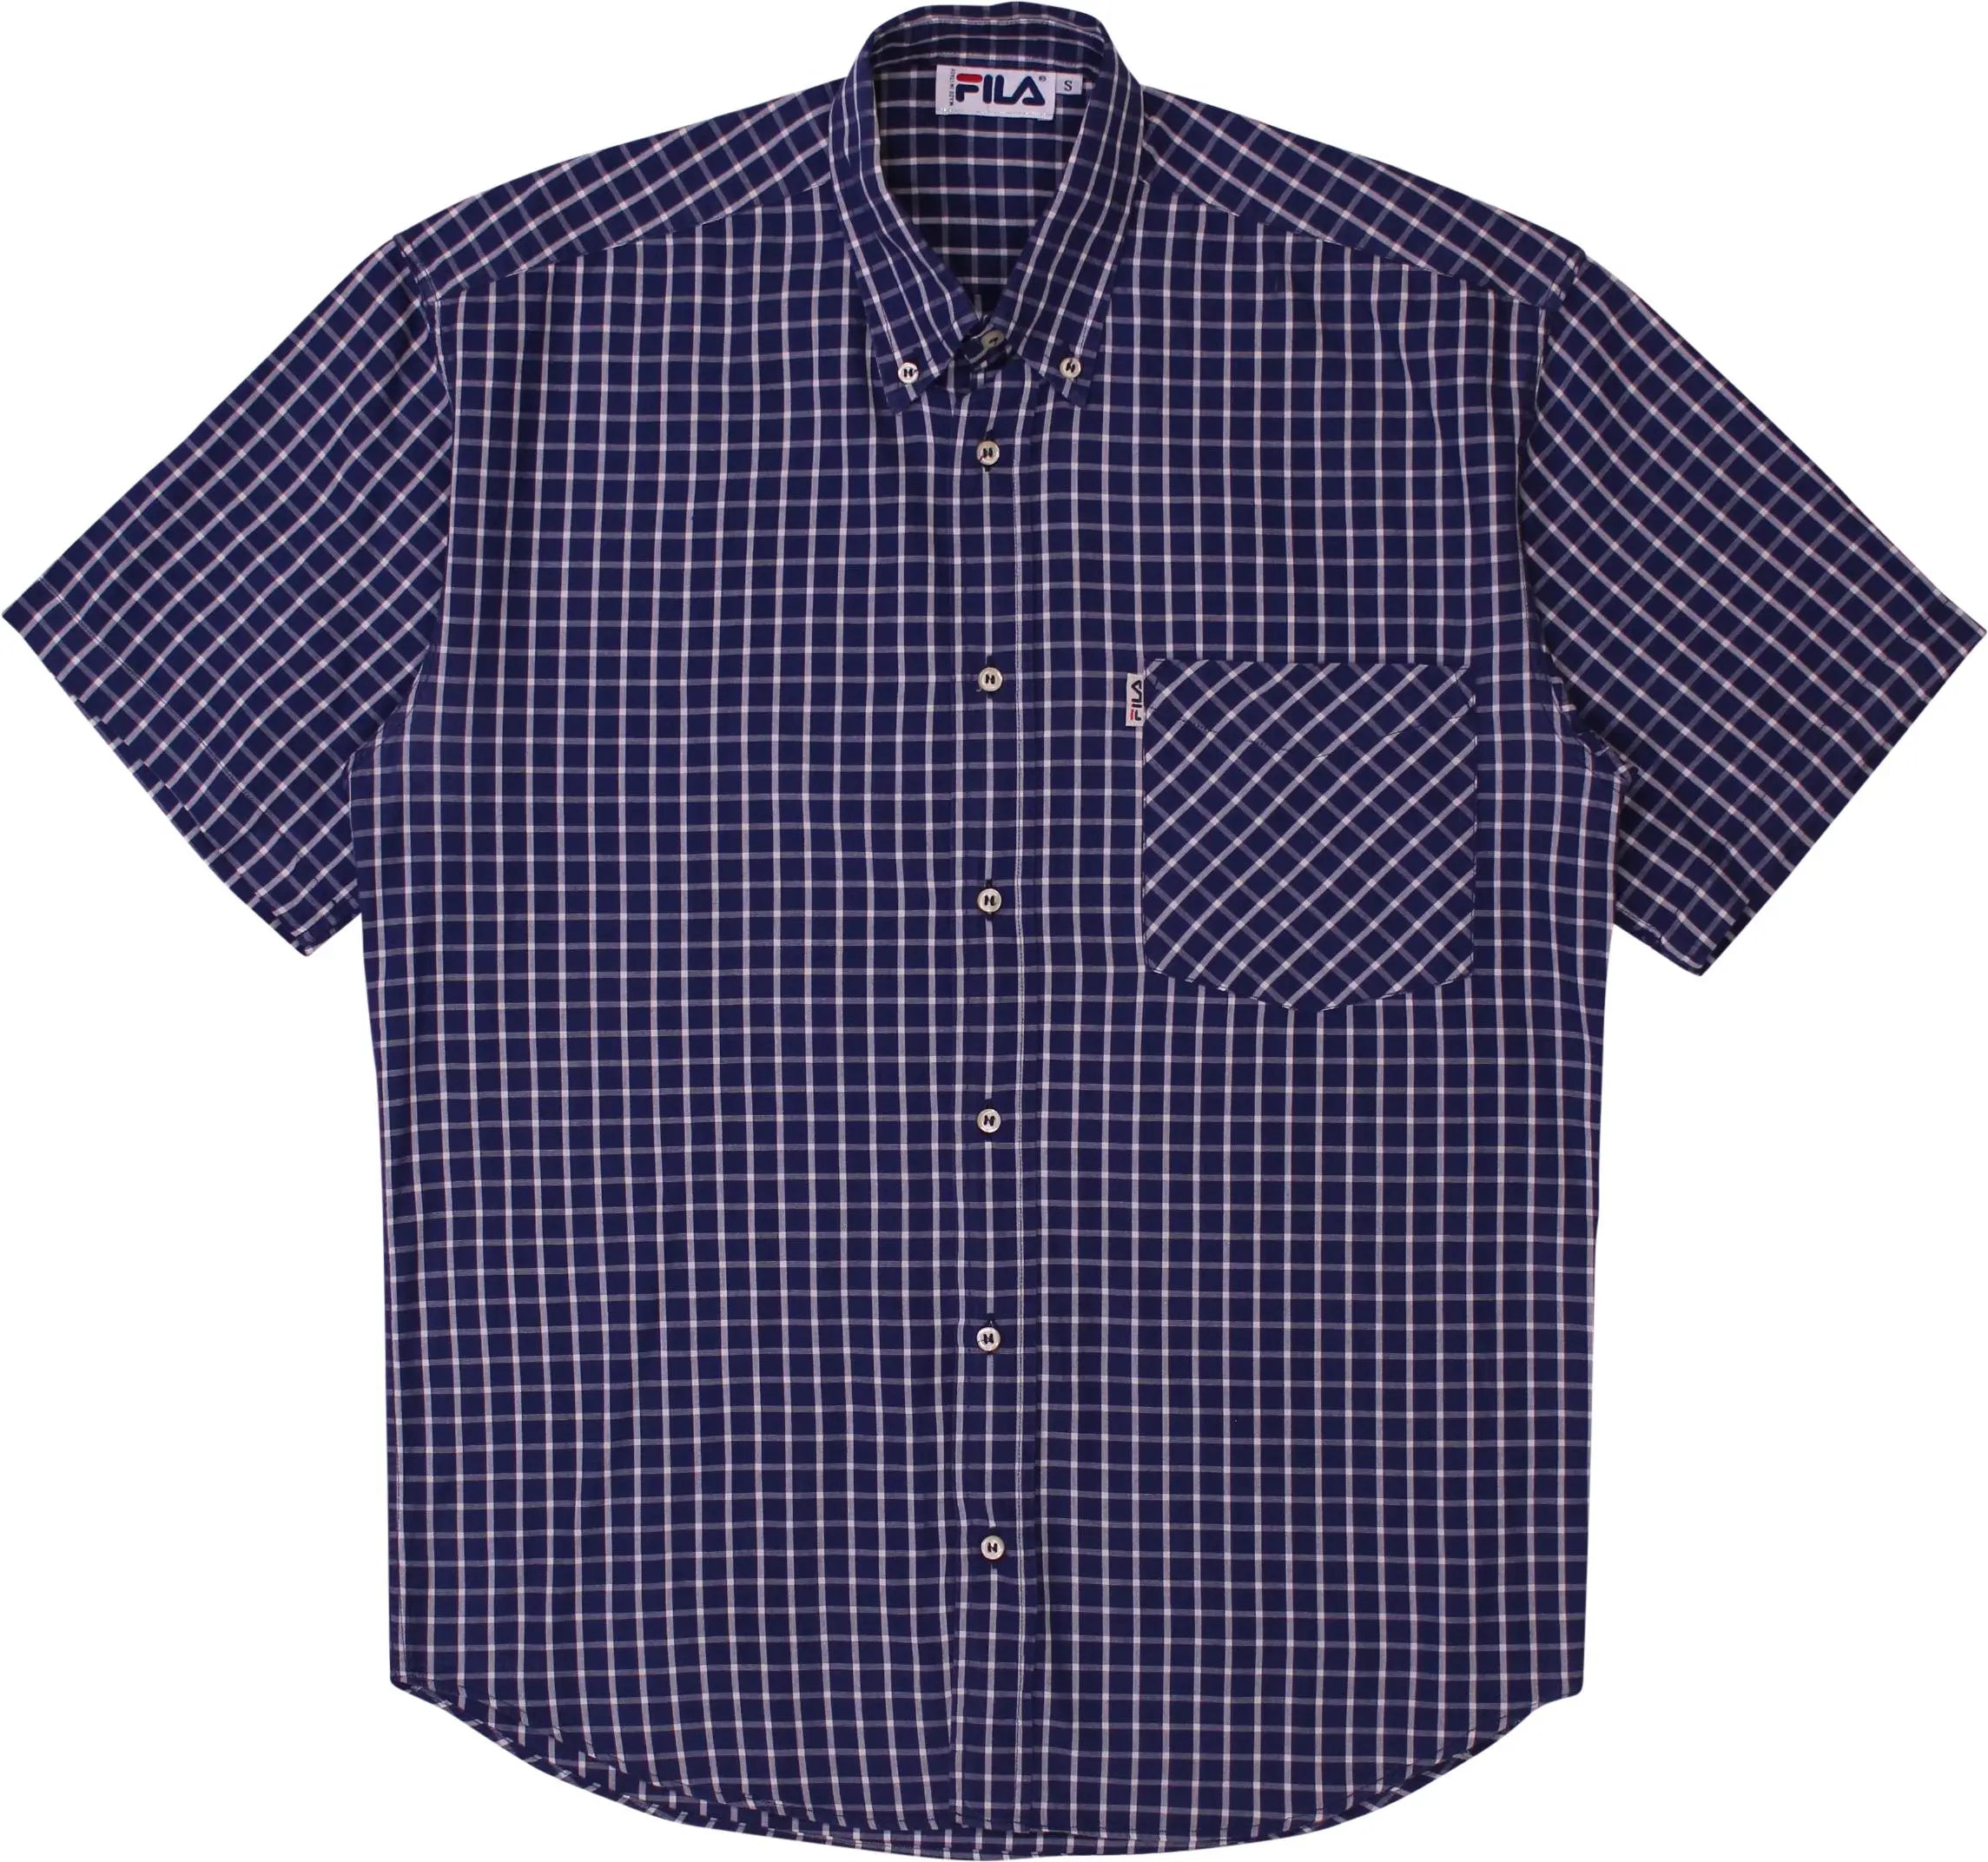 Fila - Fila Short Sleeve Shirt- ThriftTale.com - Vintage and second handclothing